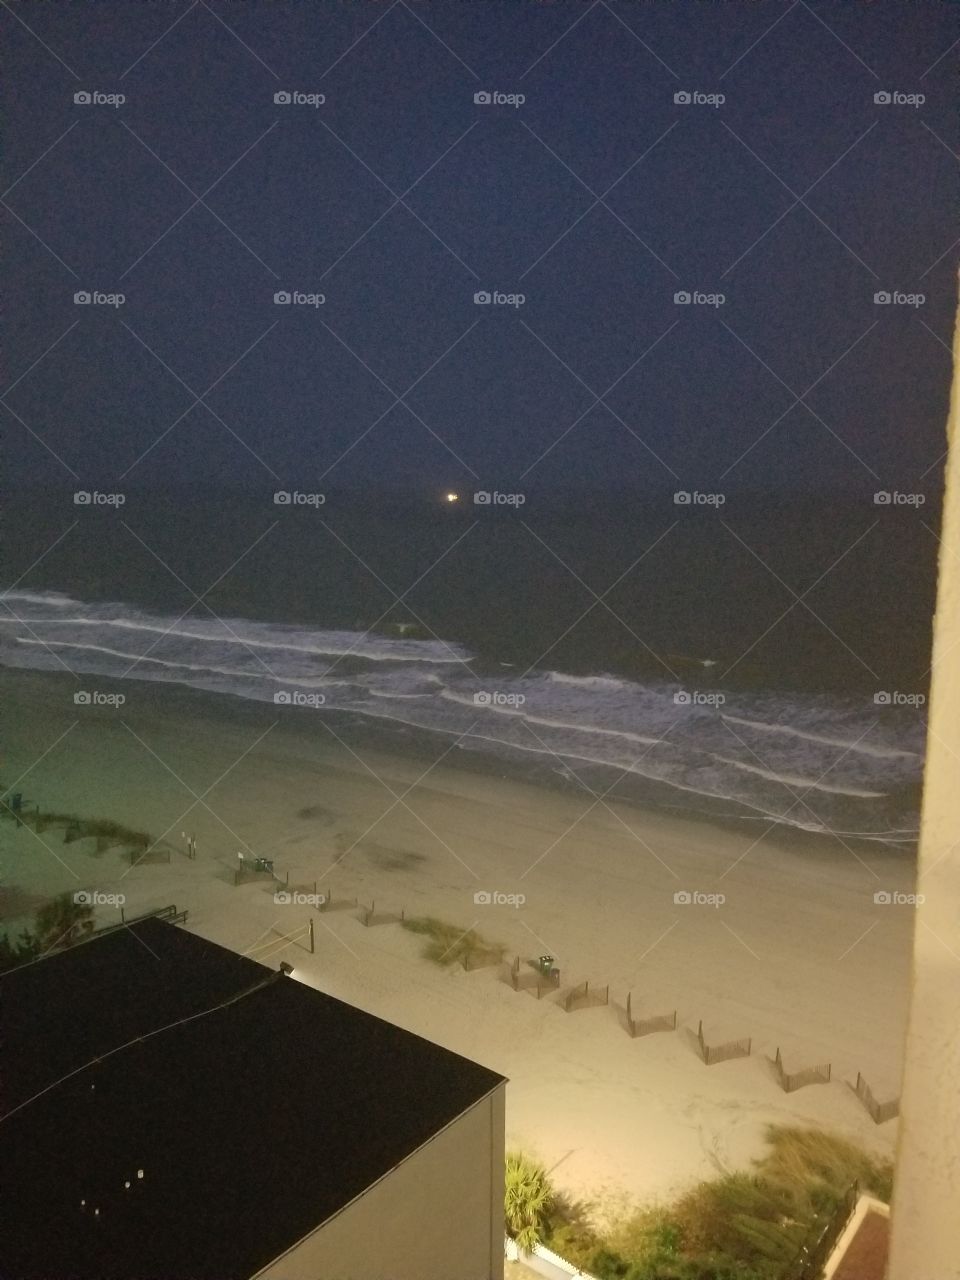 Myrtle Beach South Carolina in night with Misty Rain